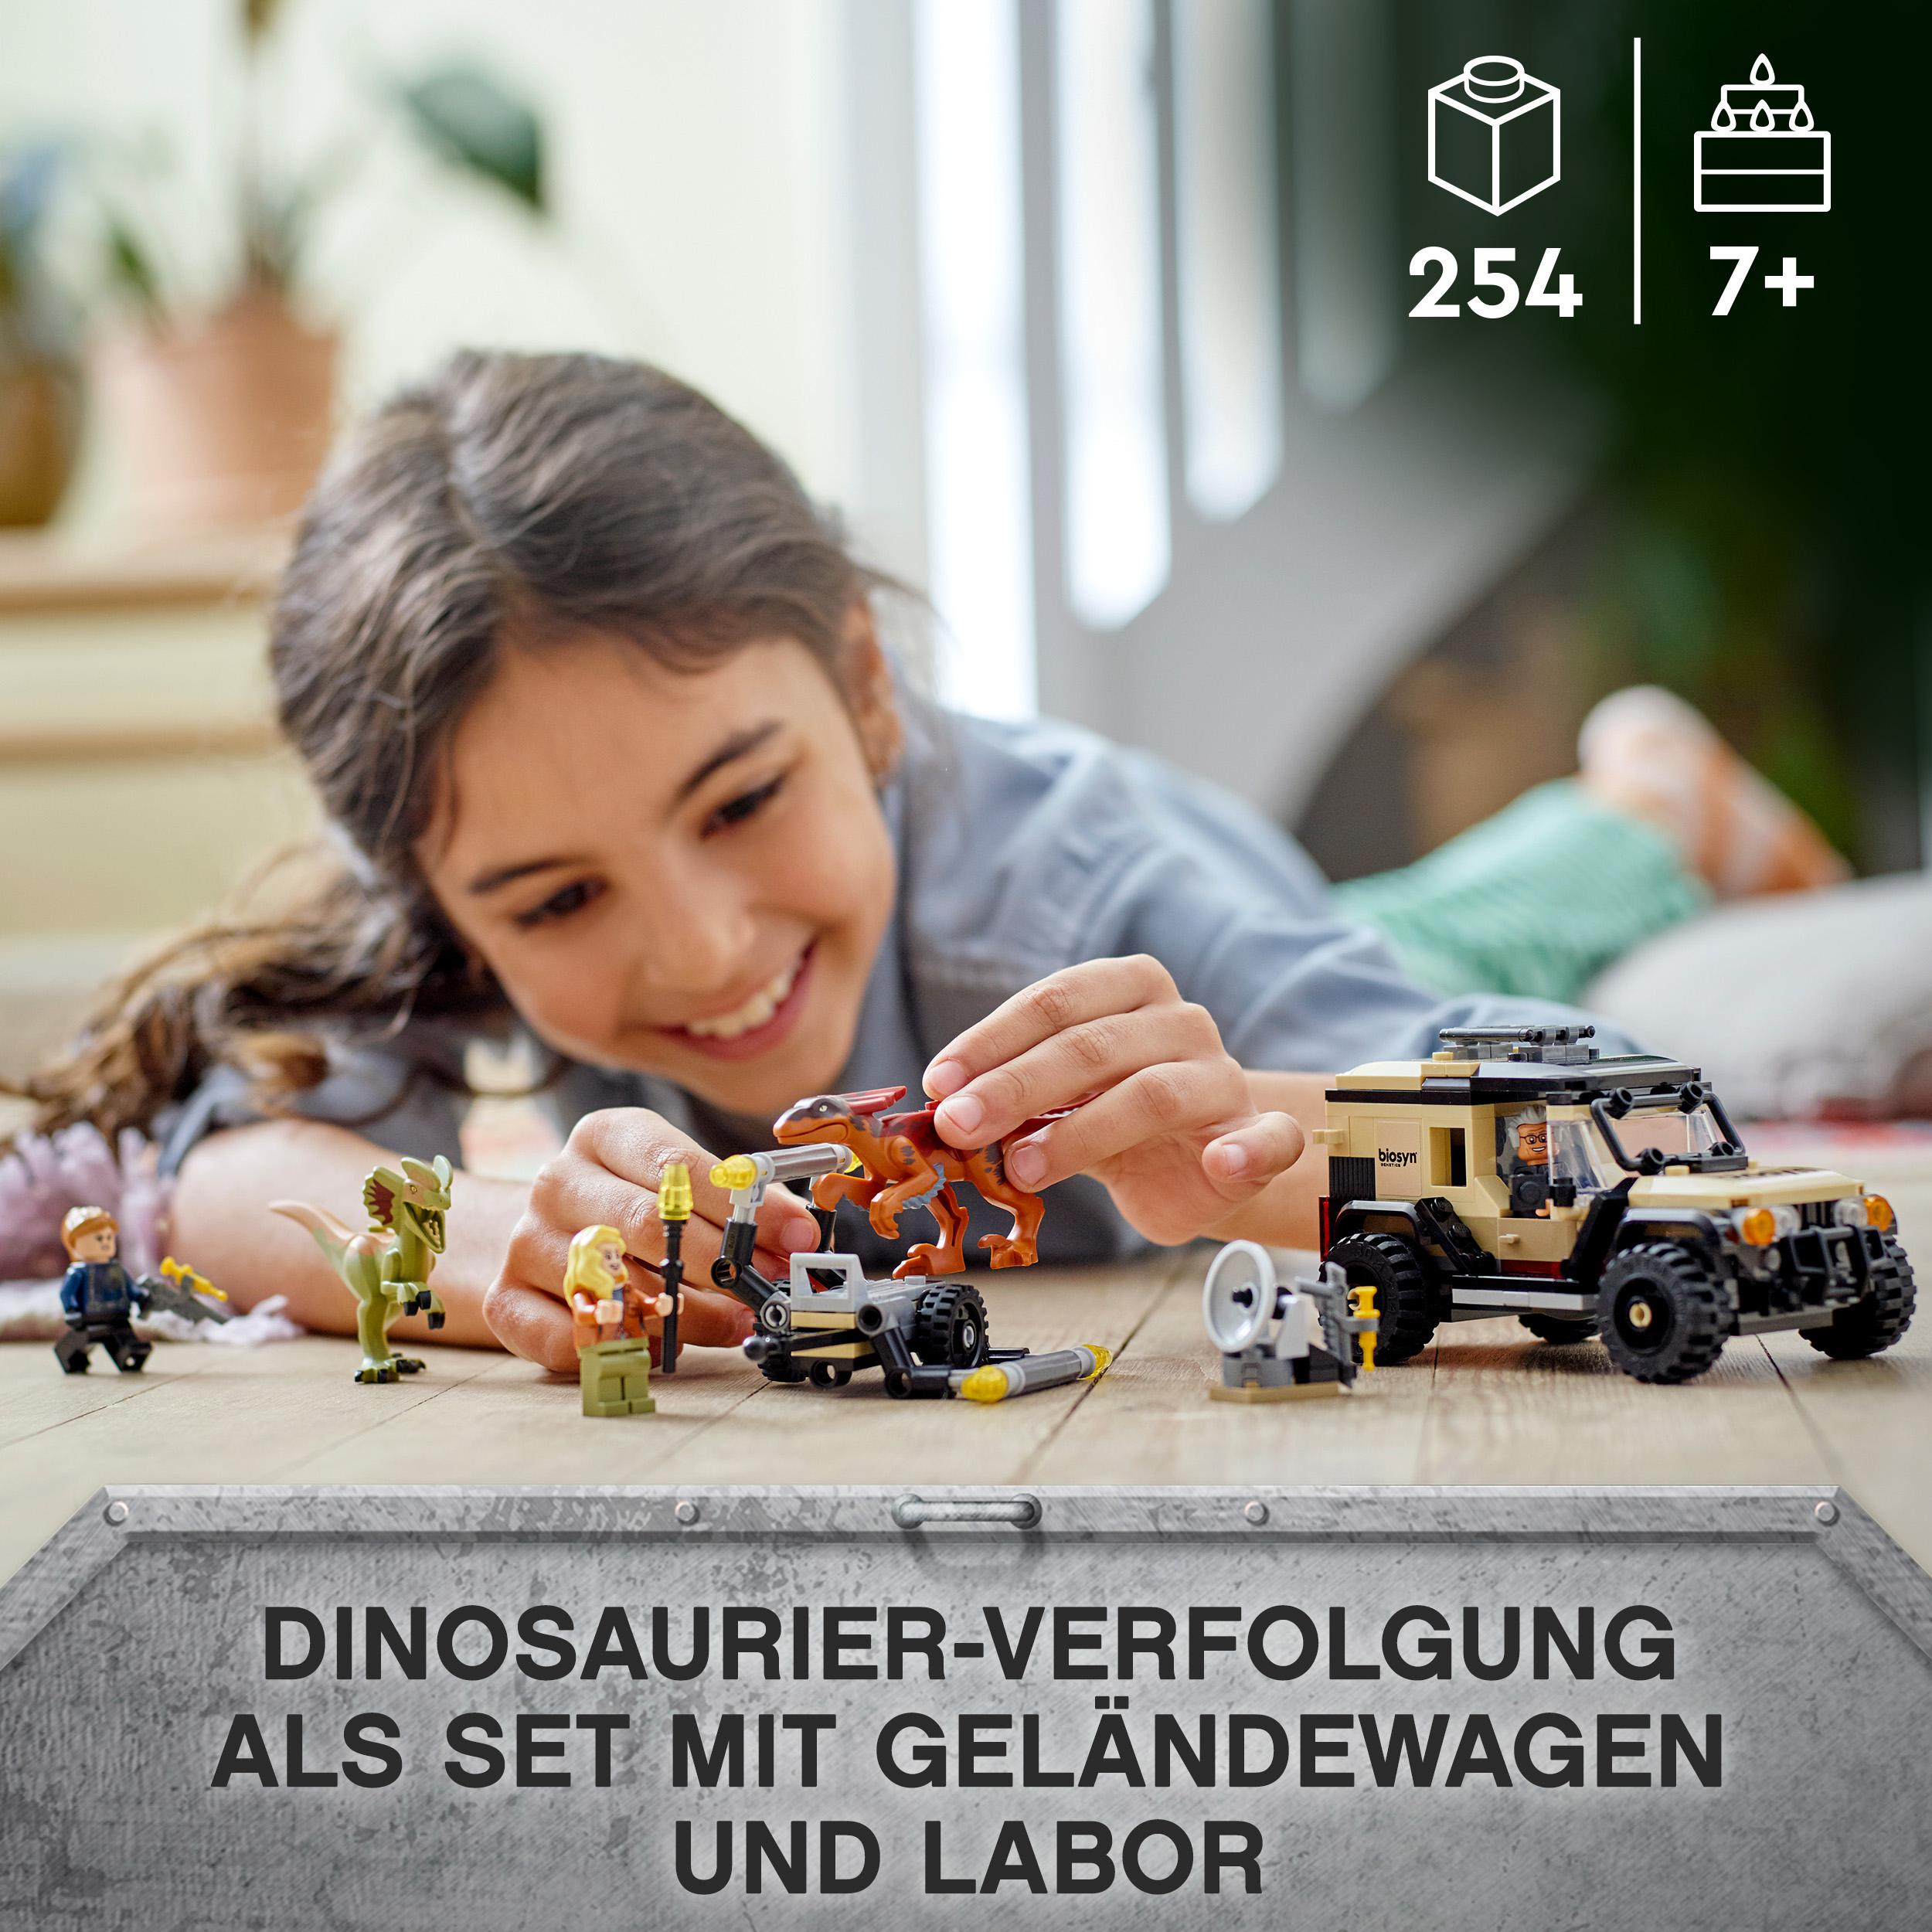 76951 LEGO Bausatz, Mehrfarbig Dilophosaurus World Pyroraptor Jurassic & Transport